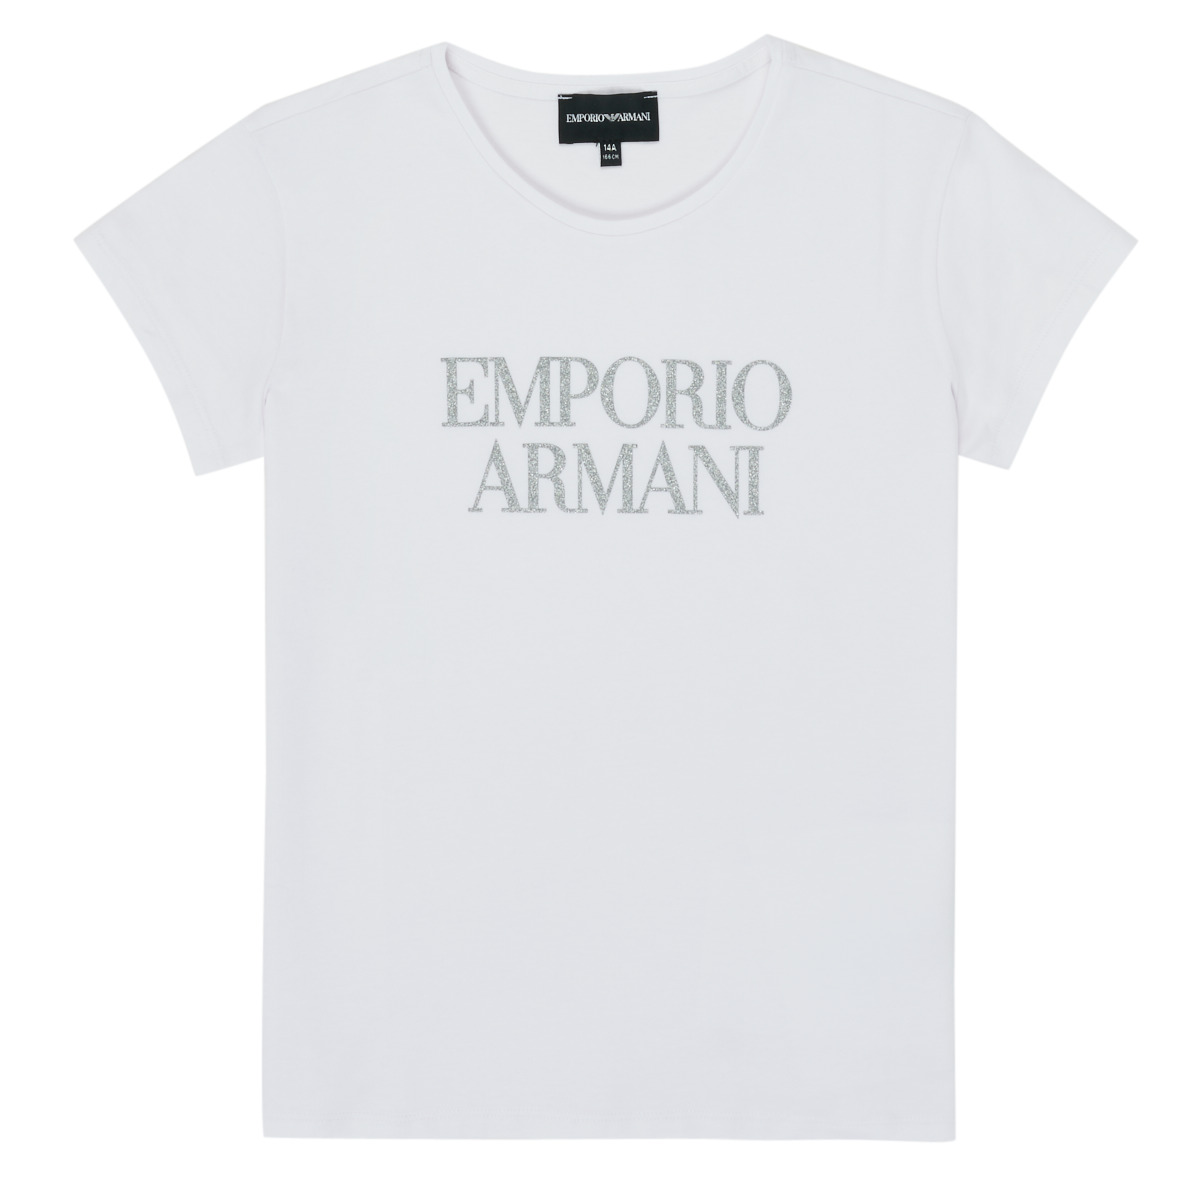 Textil Dívčí Trička s krátkým rukávem Emporio Armani 8N3T03-3J08Z-0100 Bílá